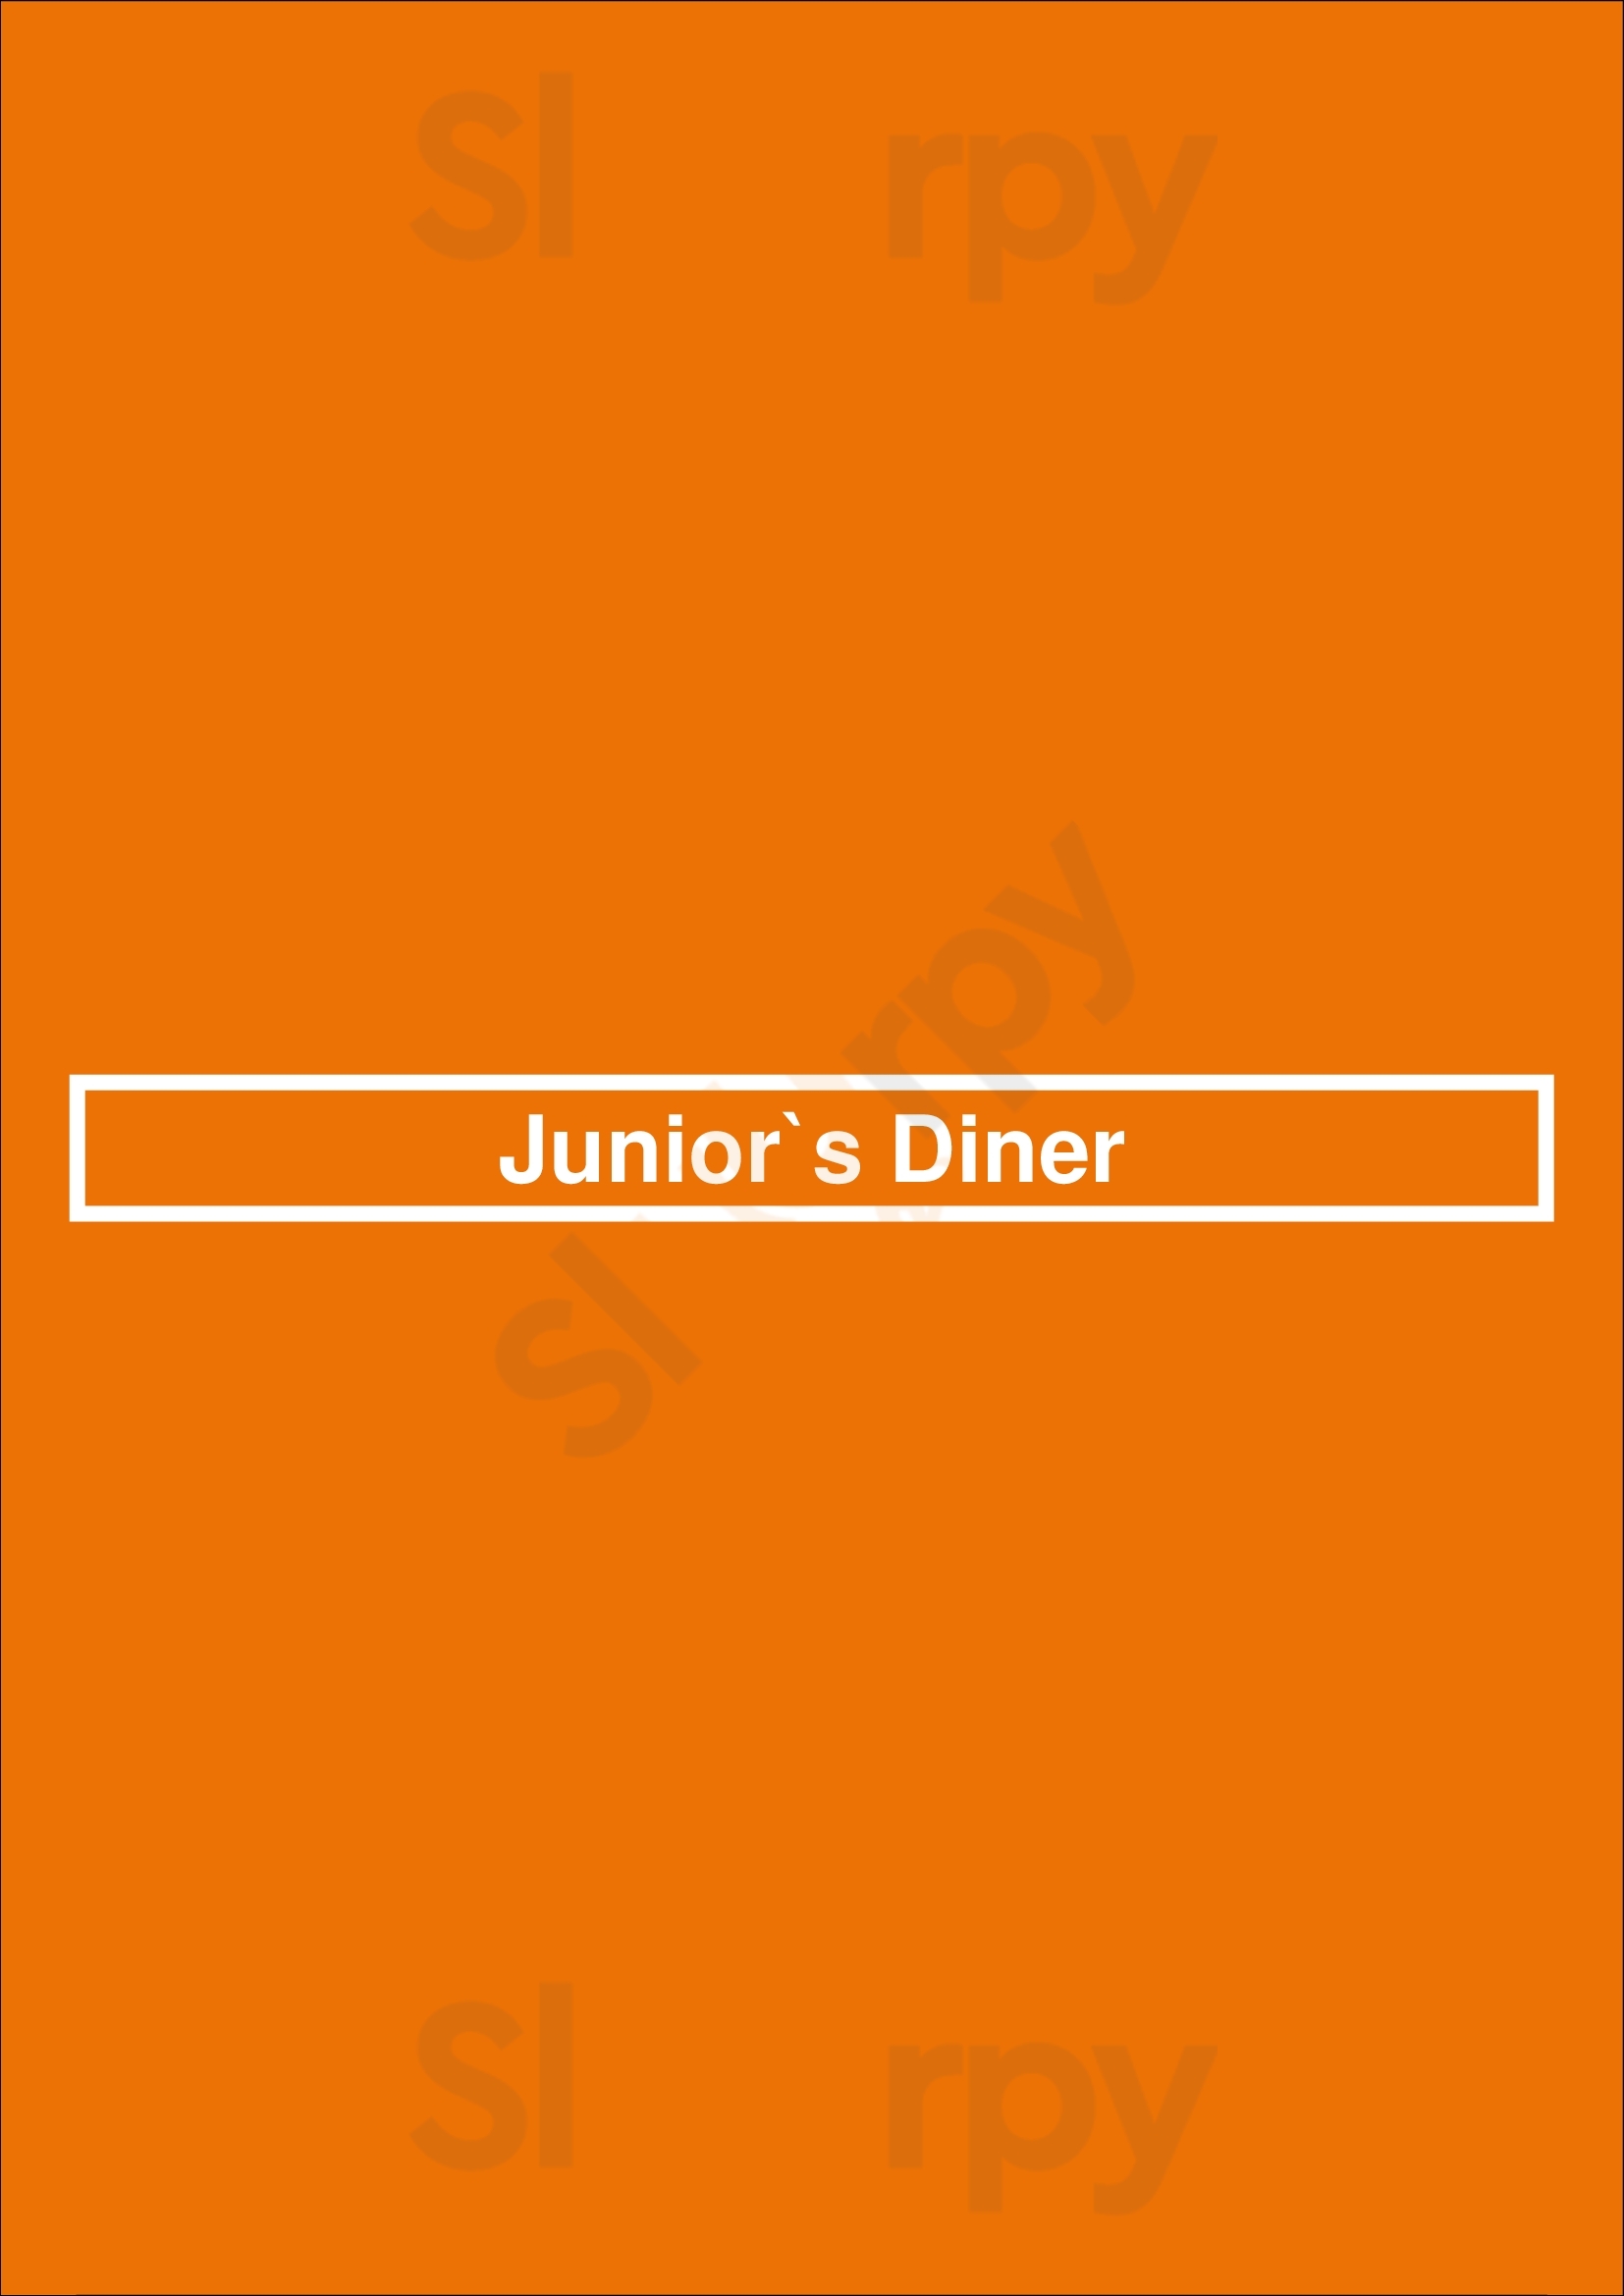 Junior's Diner Orlando Menu - 1